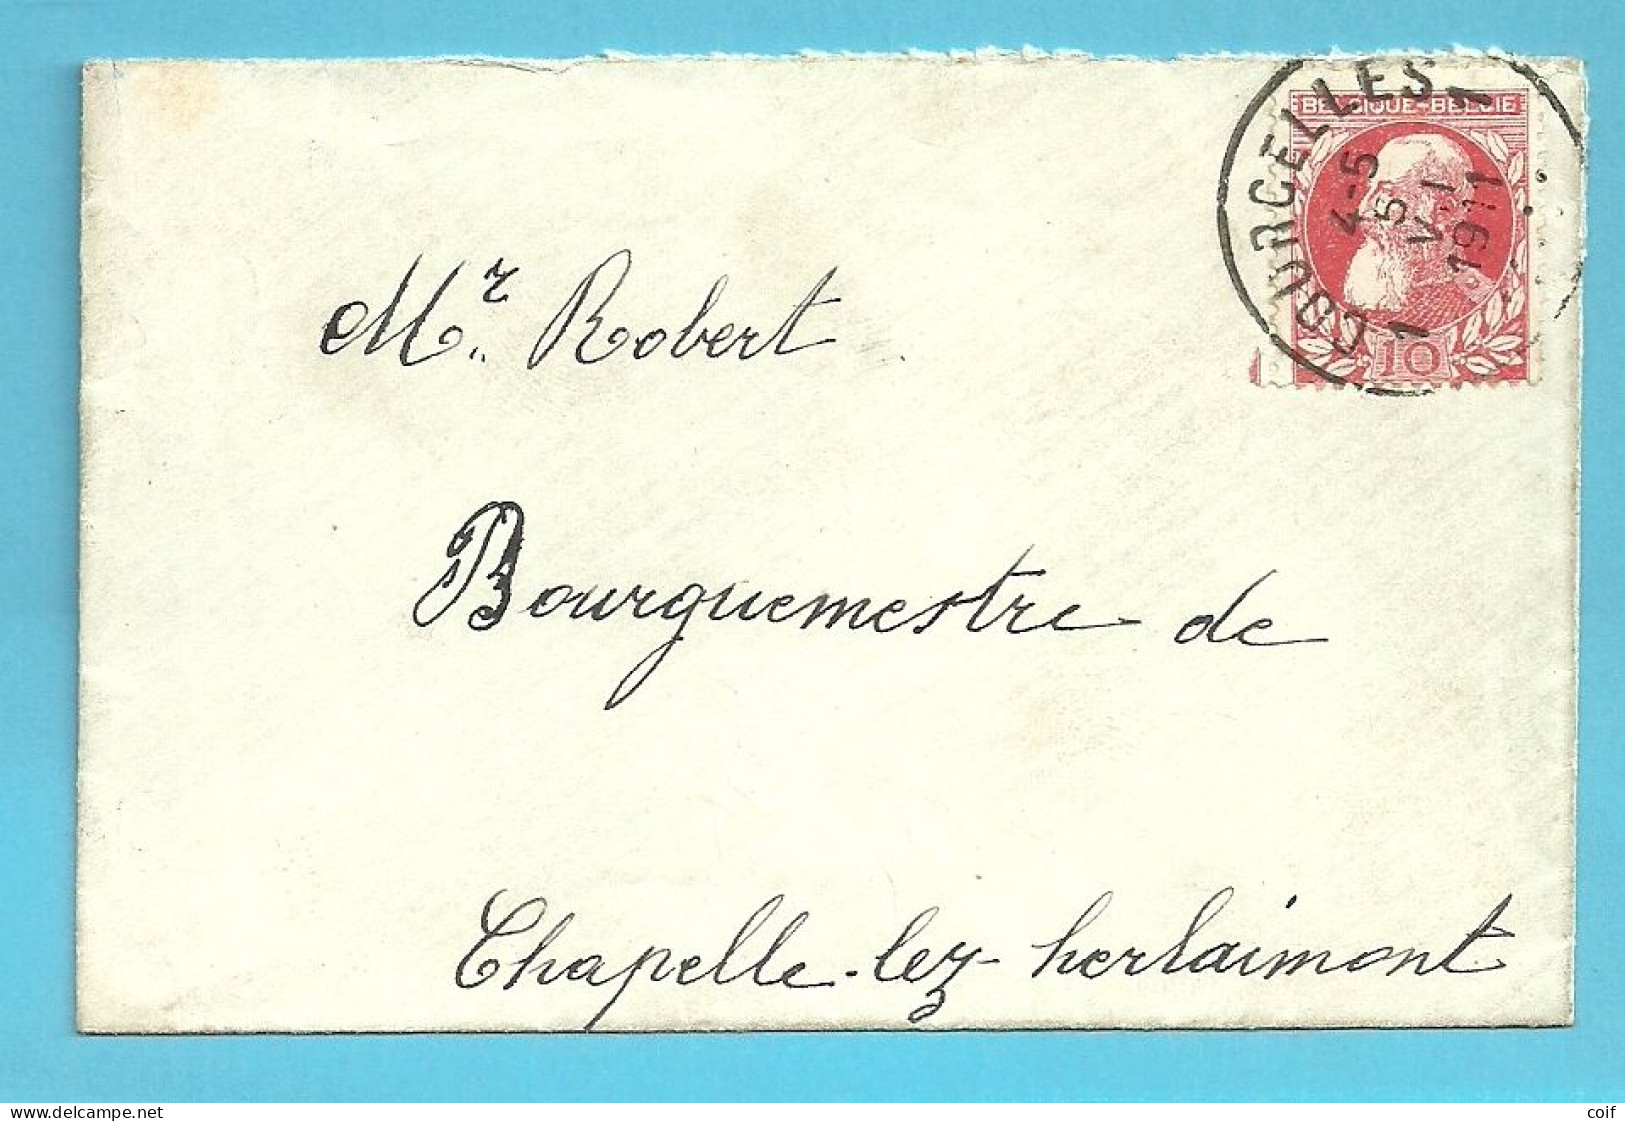 74 Op Brief Stempel COURCELLES 1 (28mm) - 1905 Breiter Bart